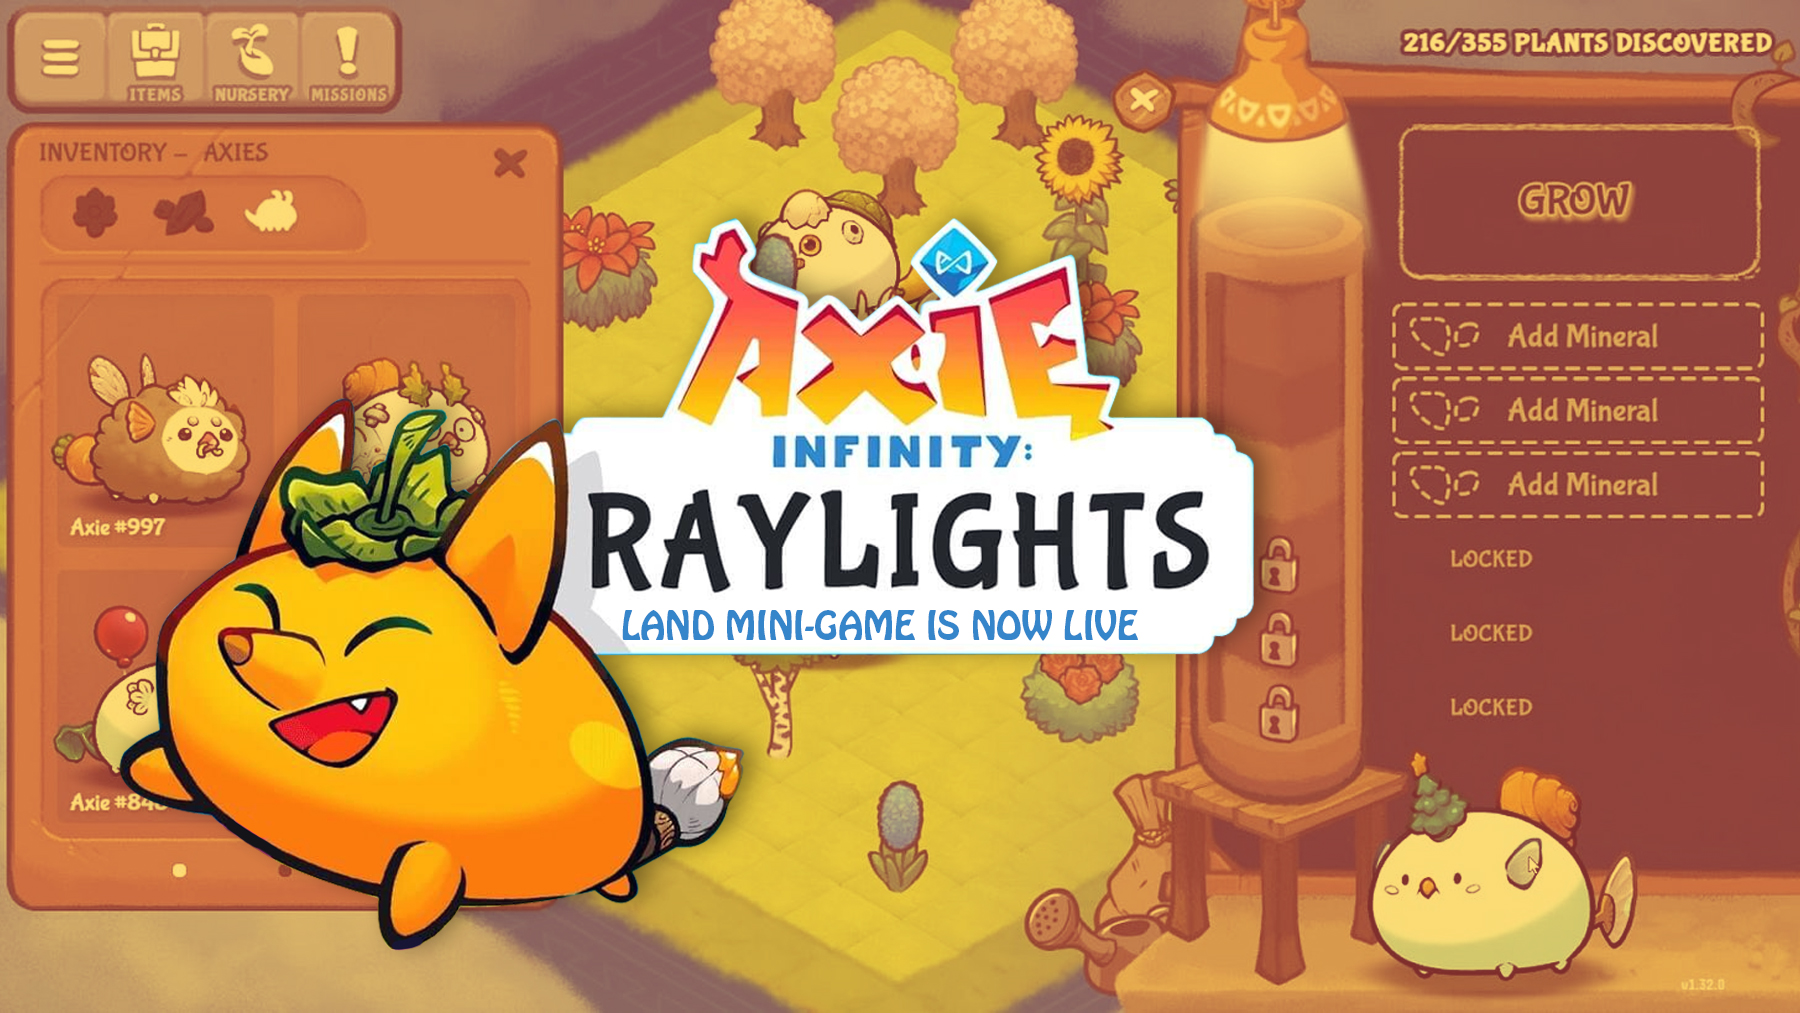 ¡El minijuego Axie Infinity Raylights Land ya está disponible!